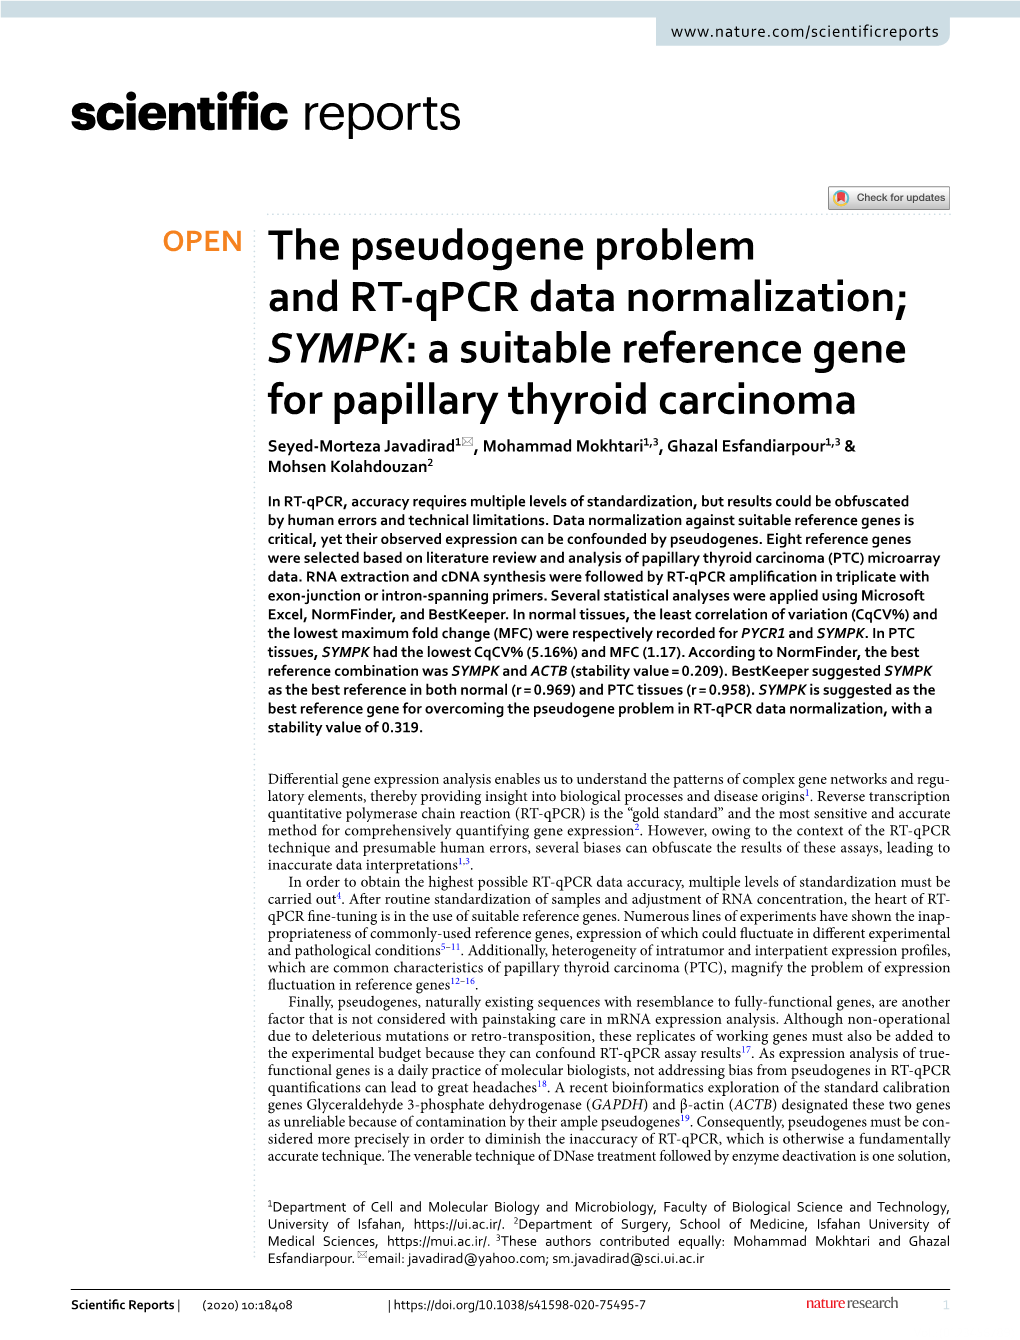 The Pseudogene Problem and RT-Qpcr Data Normalization; SYMPK